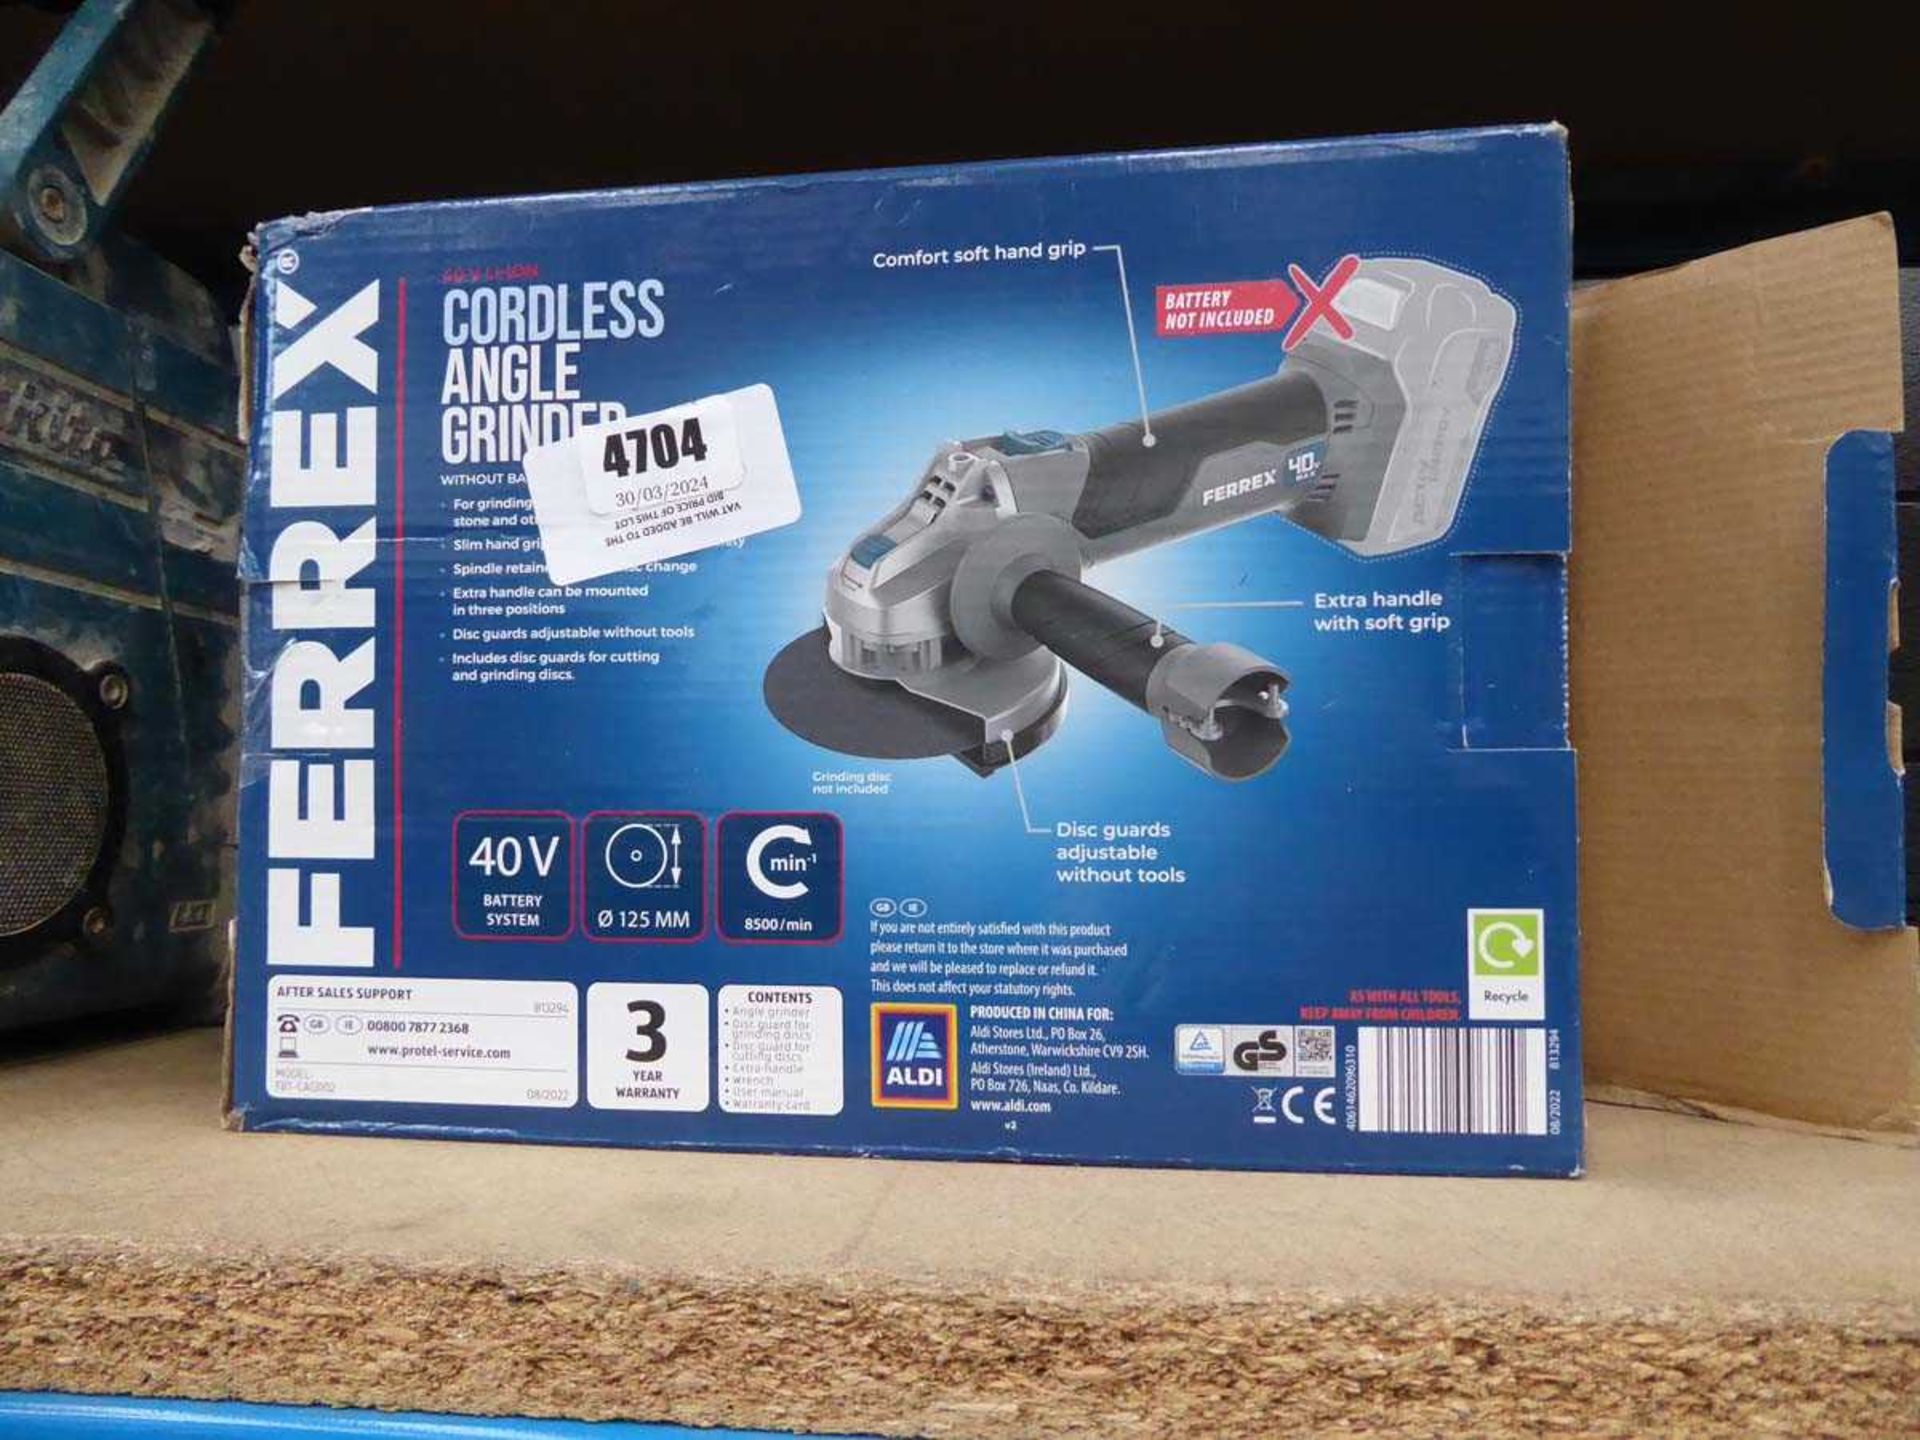 +VAT 2 Ferrex boxed tools - 1 cordless grinder and 1 SDS 240v drill